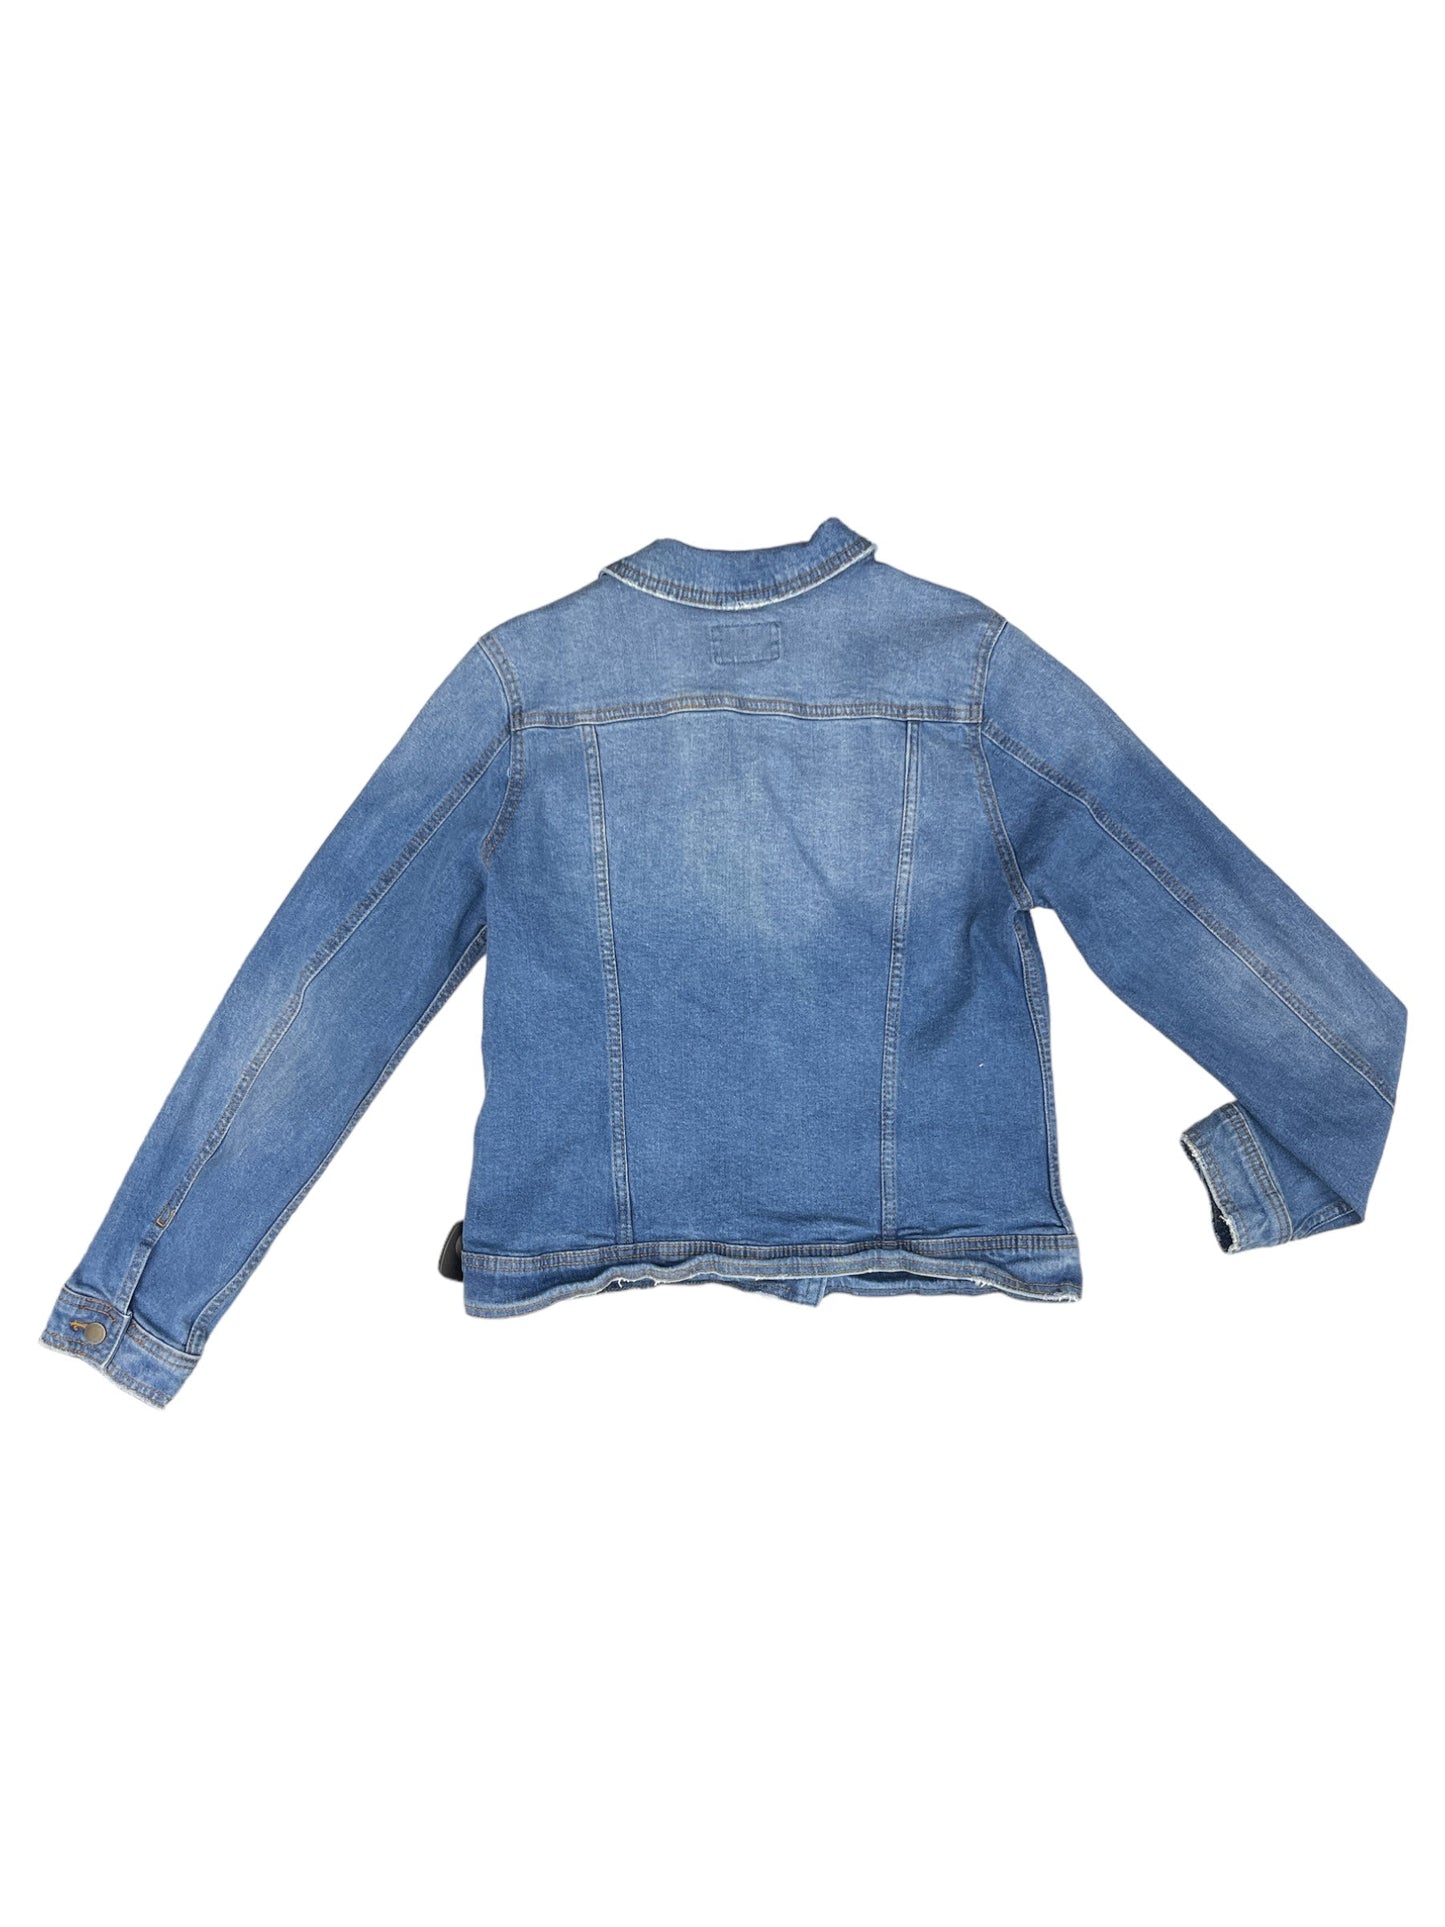 Blue Jacket Denim Universal Thread, Size M